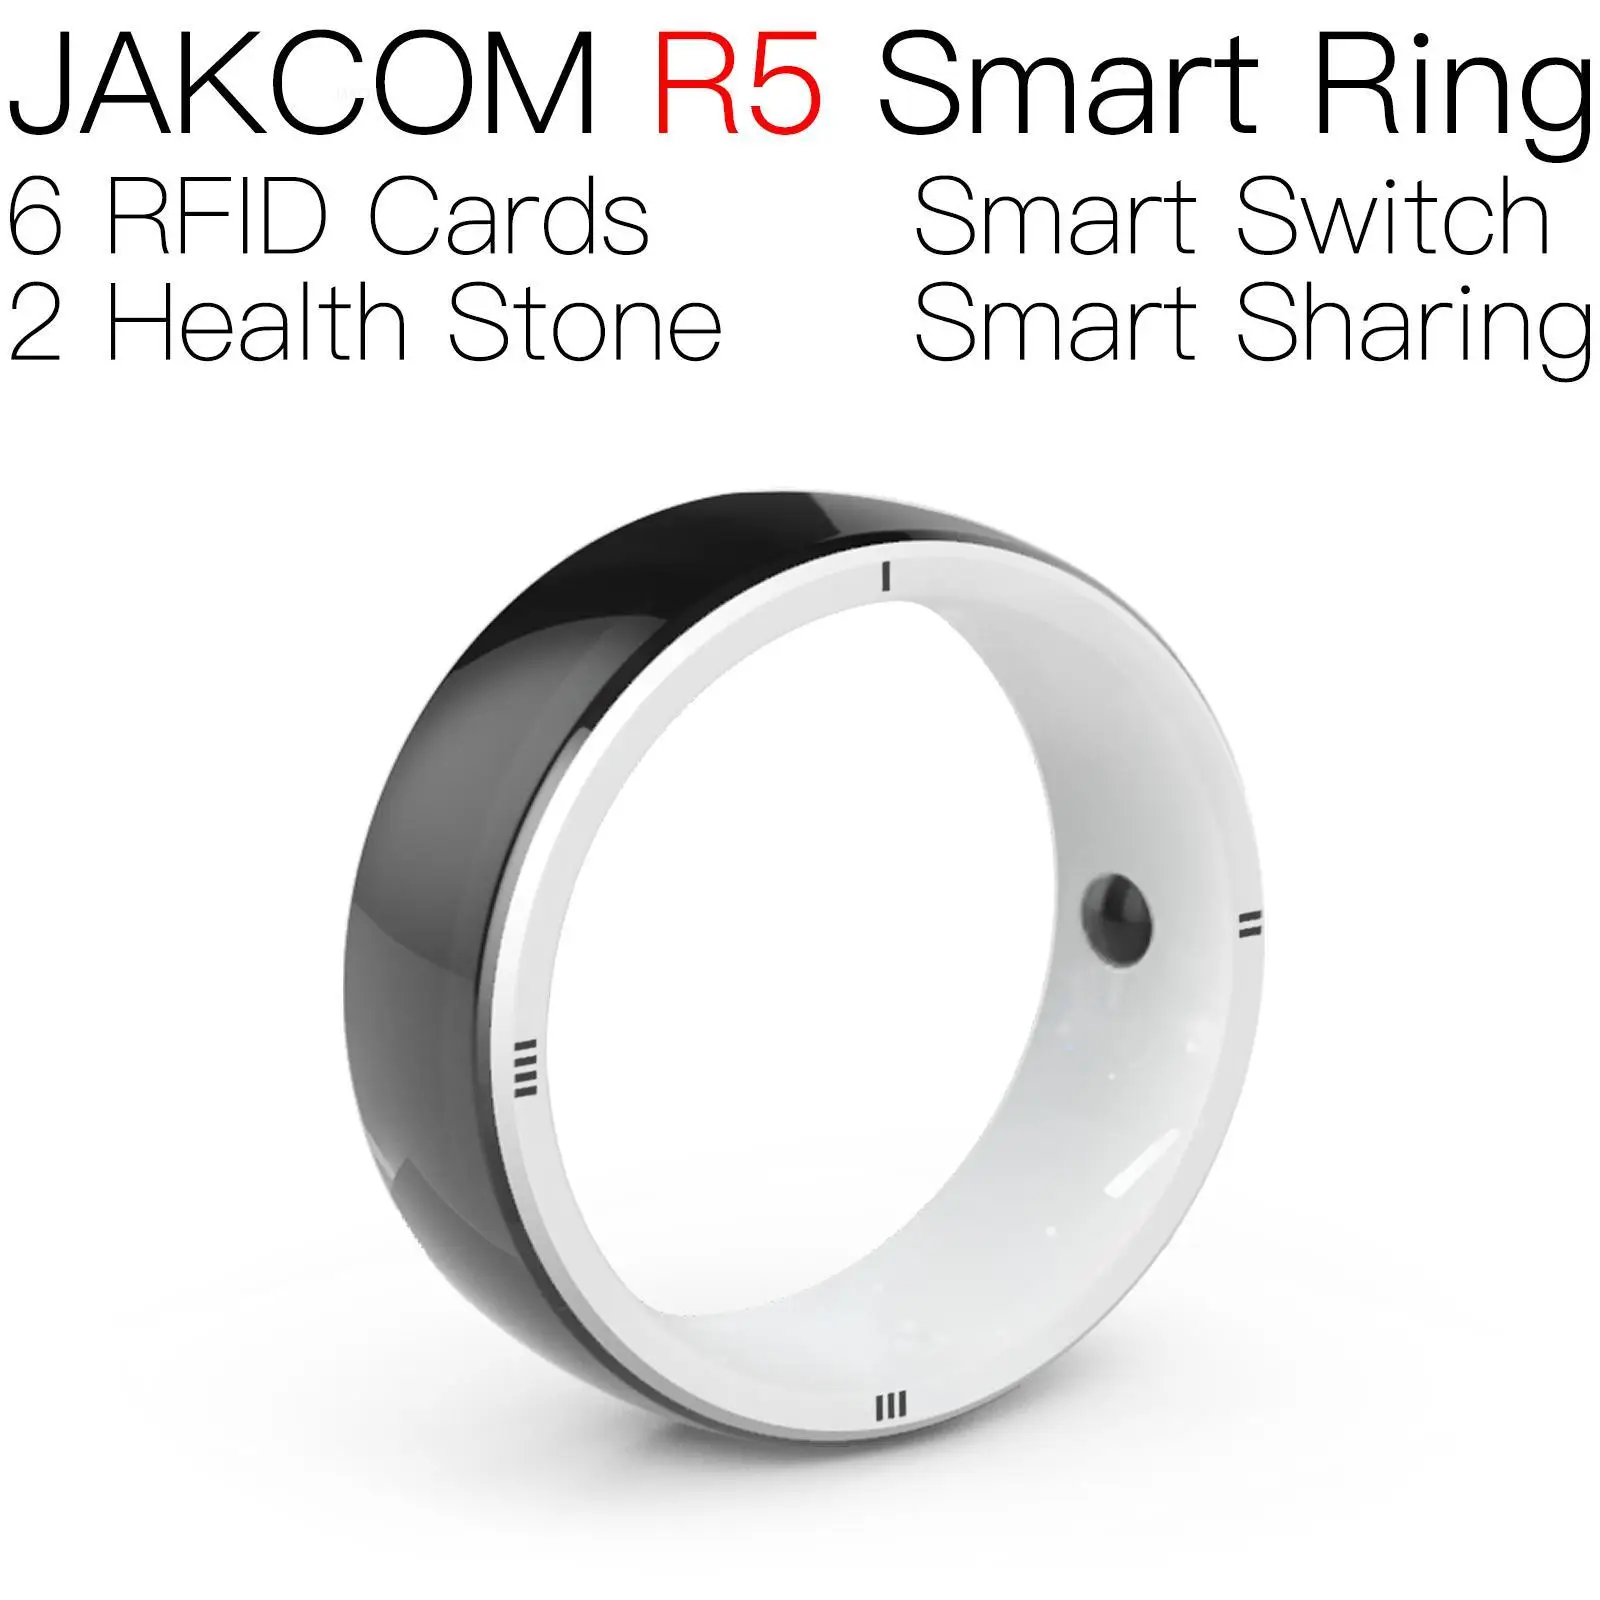 

JAKCOM R5 Smart Ring Match to zigbee scene switch remote repeater heater drag 2 band 6 original